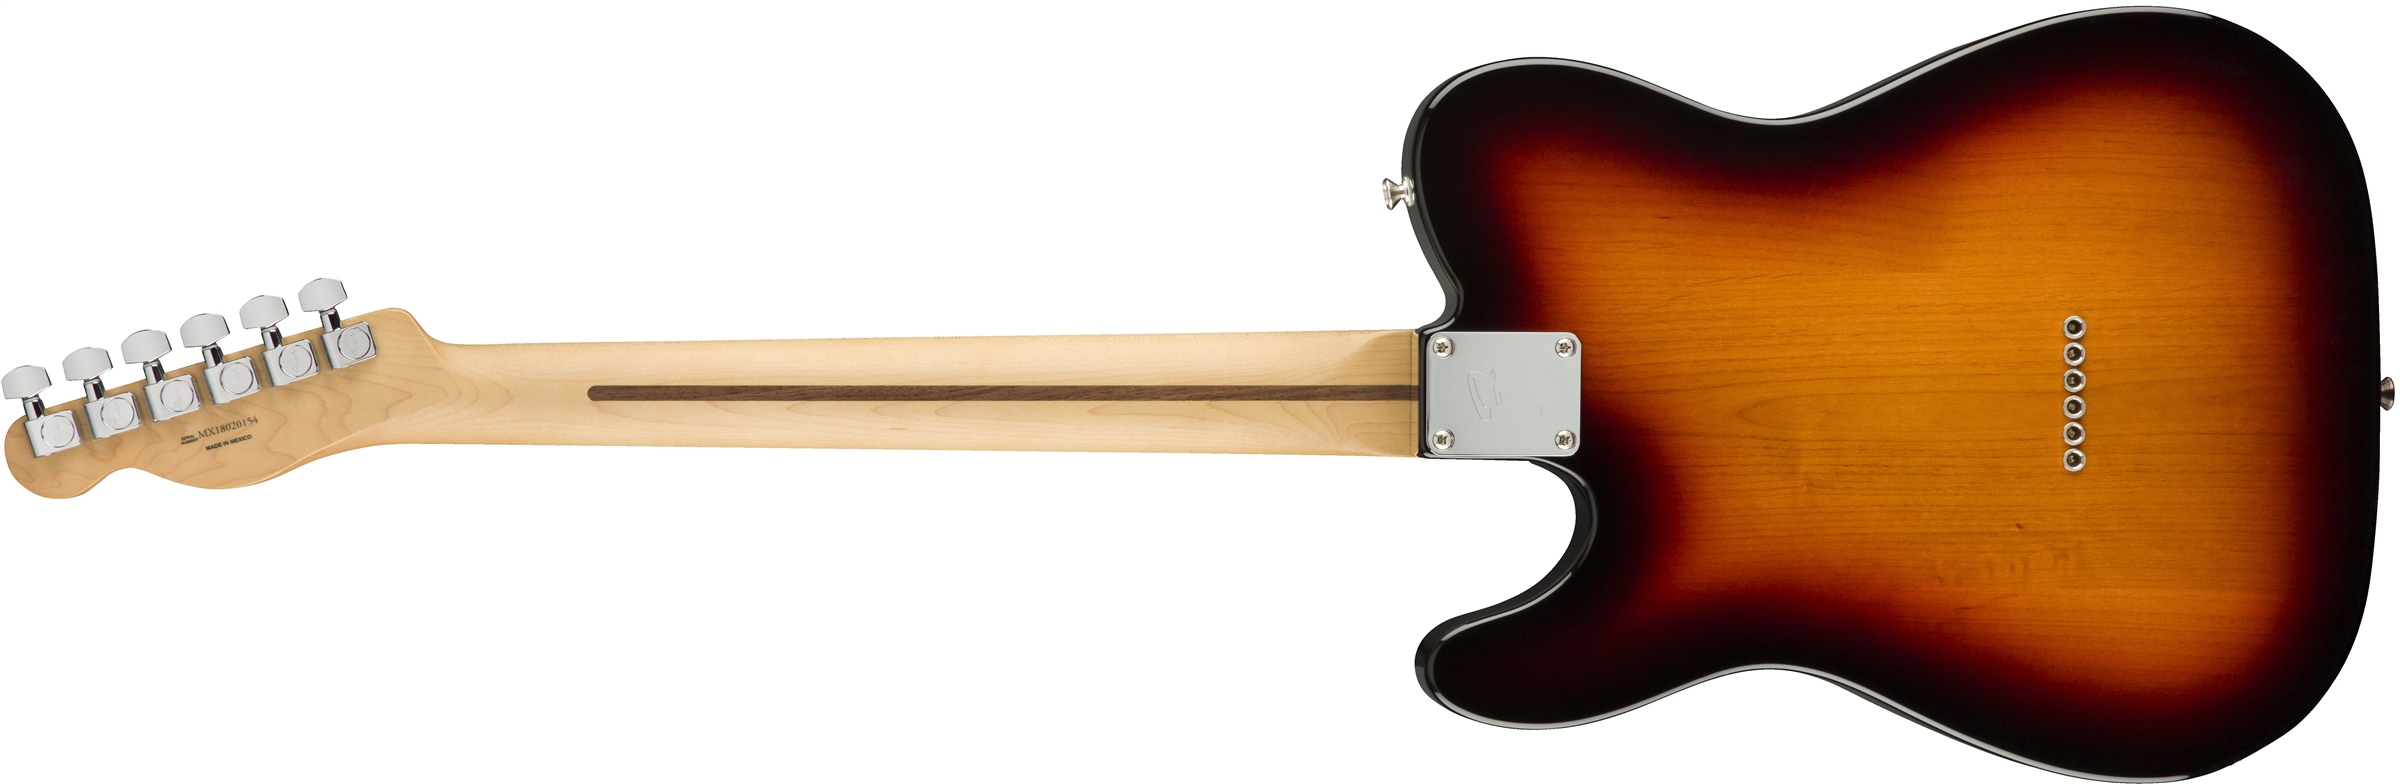 Fender Tele Player Mex Ss Pf - 3-color Sunburst - Televorm elektrische gitaar - Variation 1